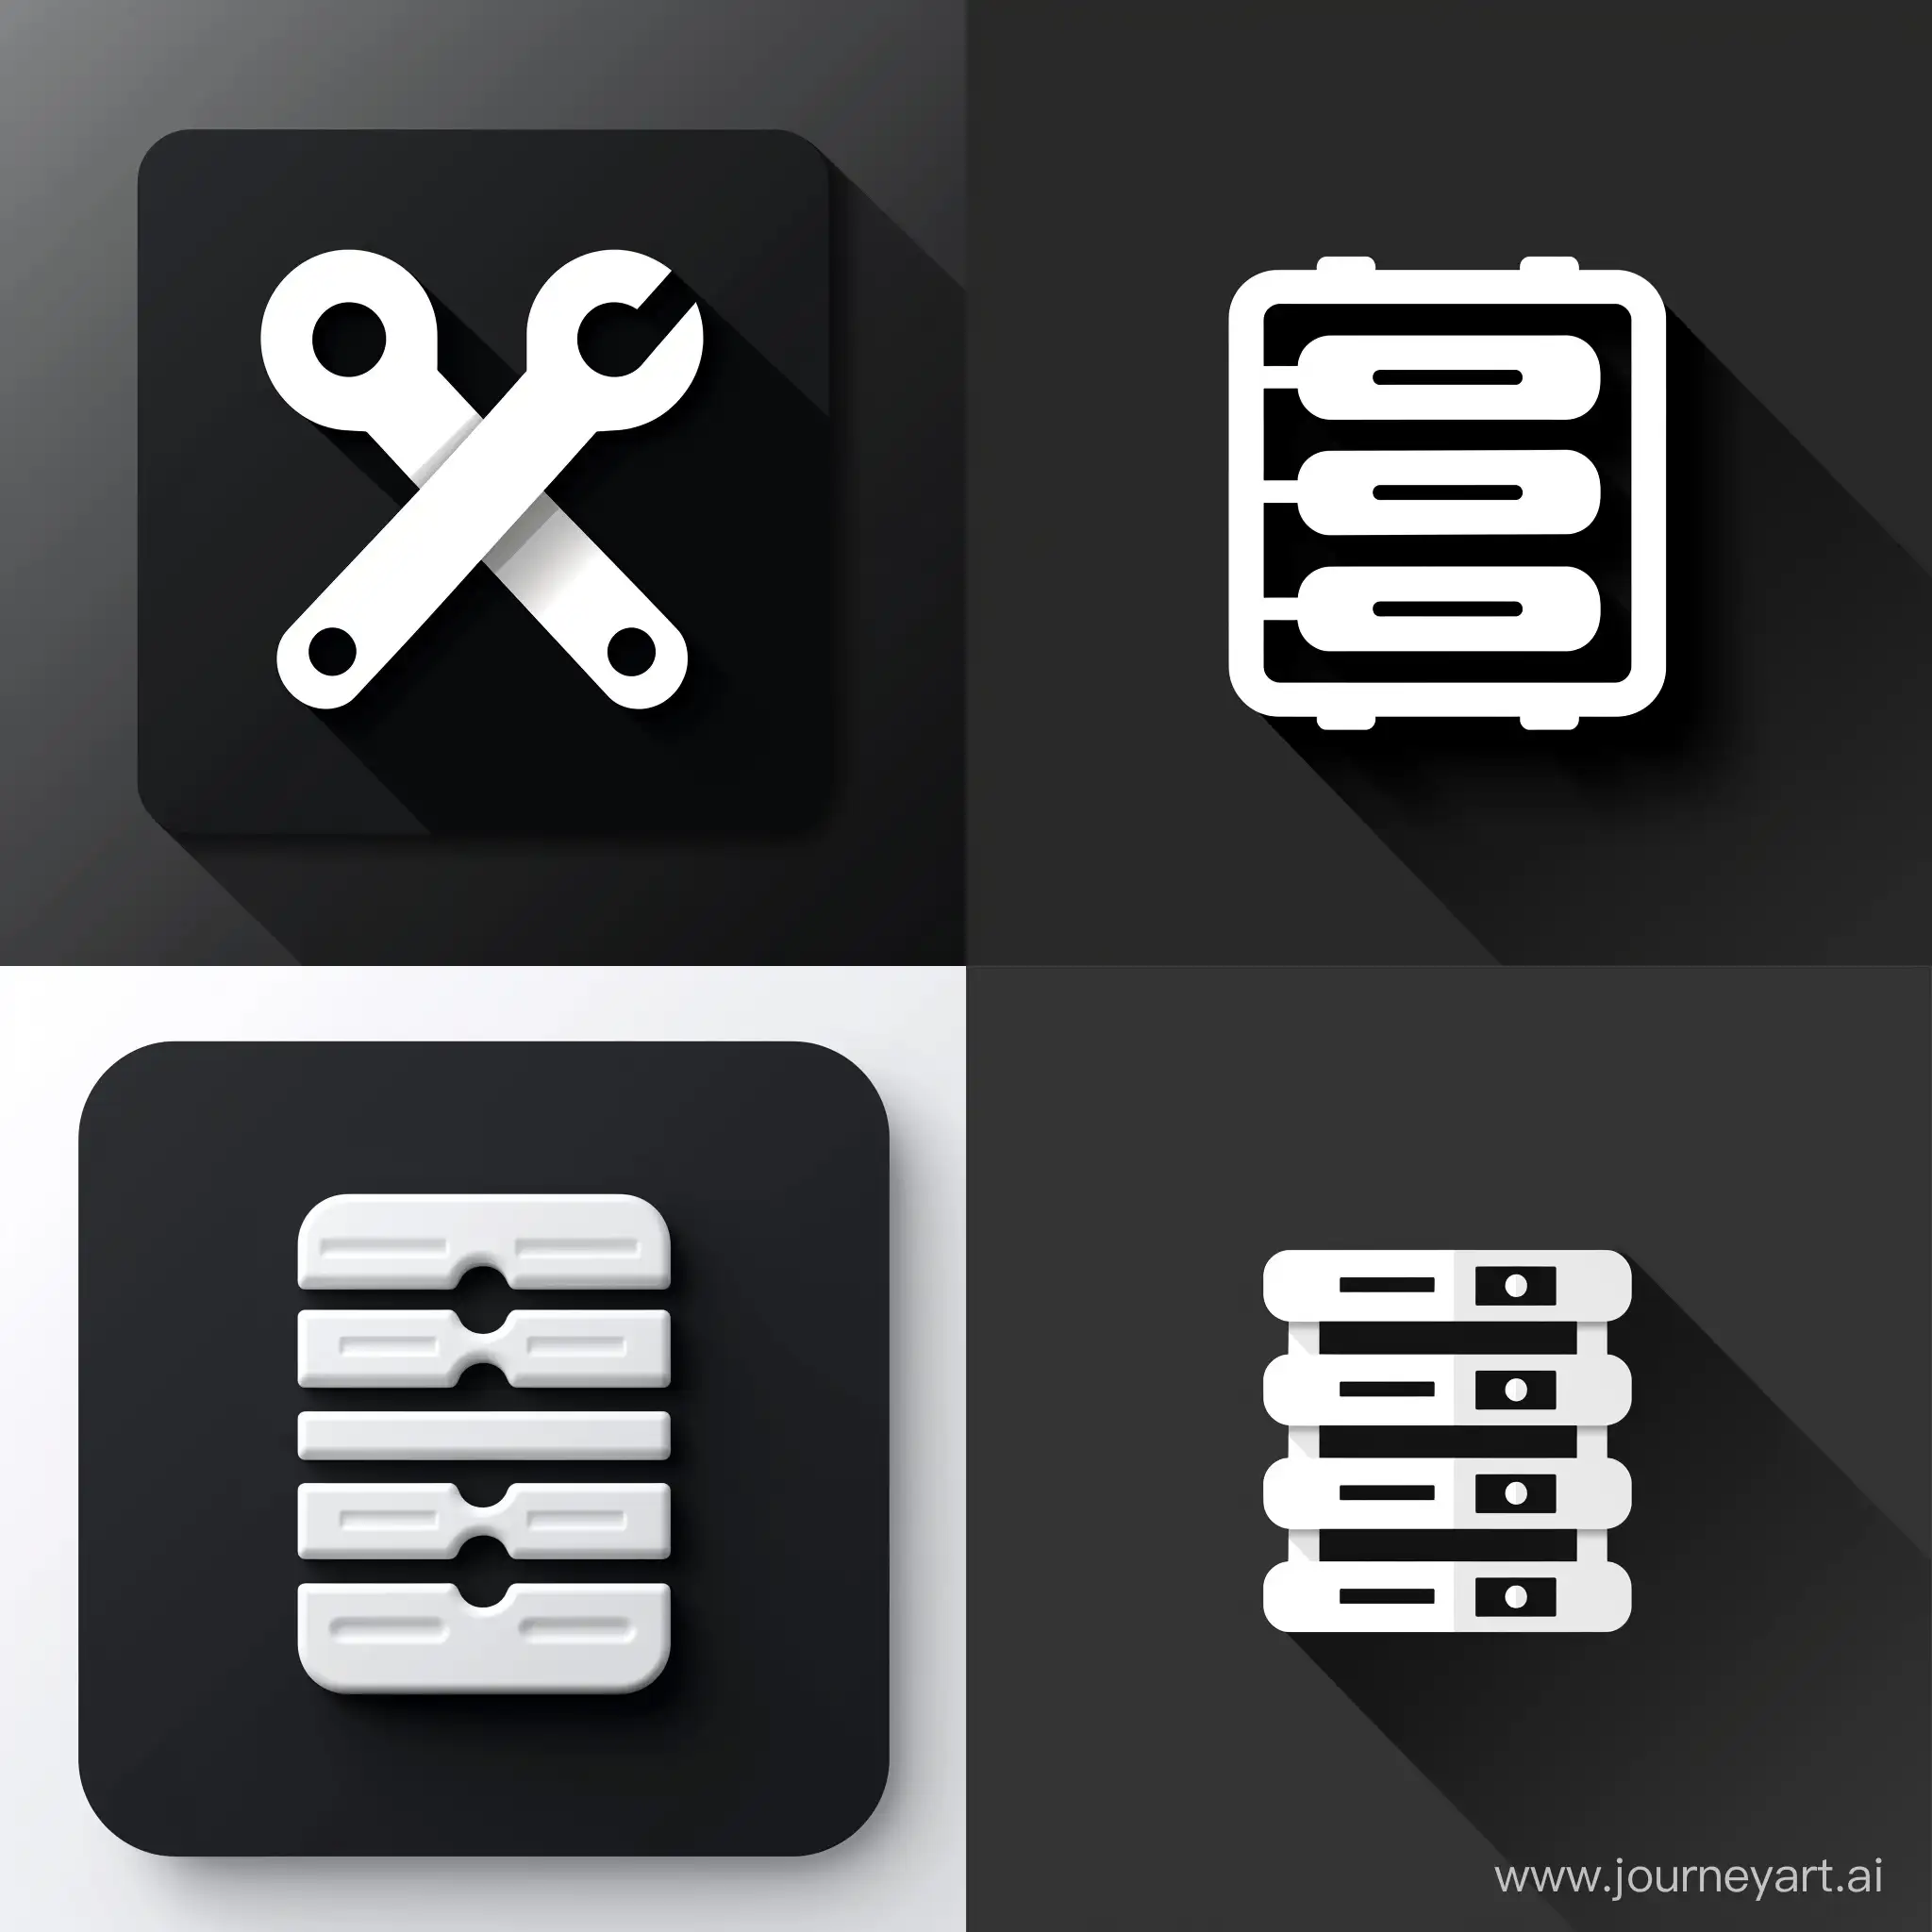 A modern, minimalist white server maintenance icon on a black background